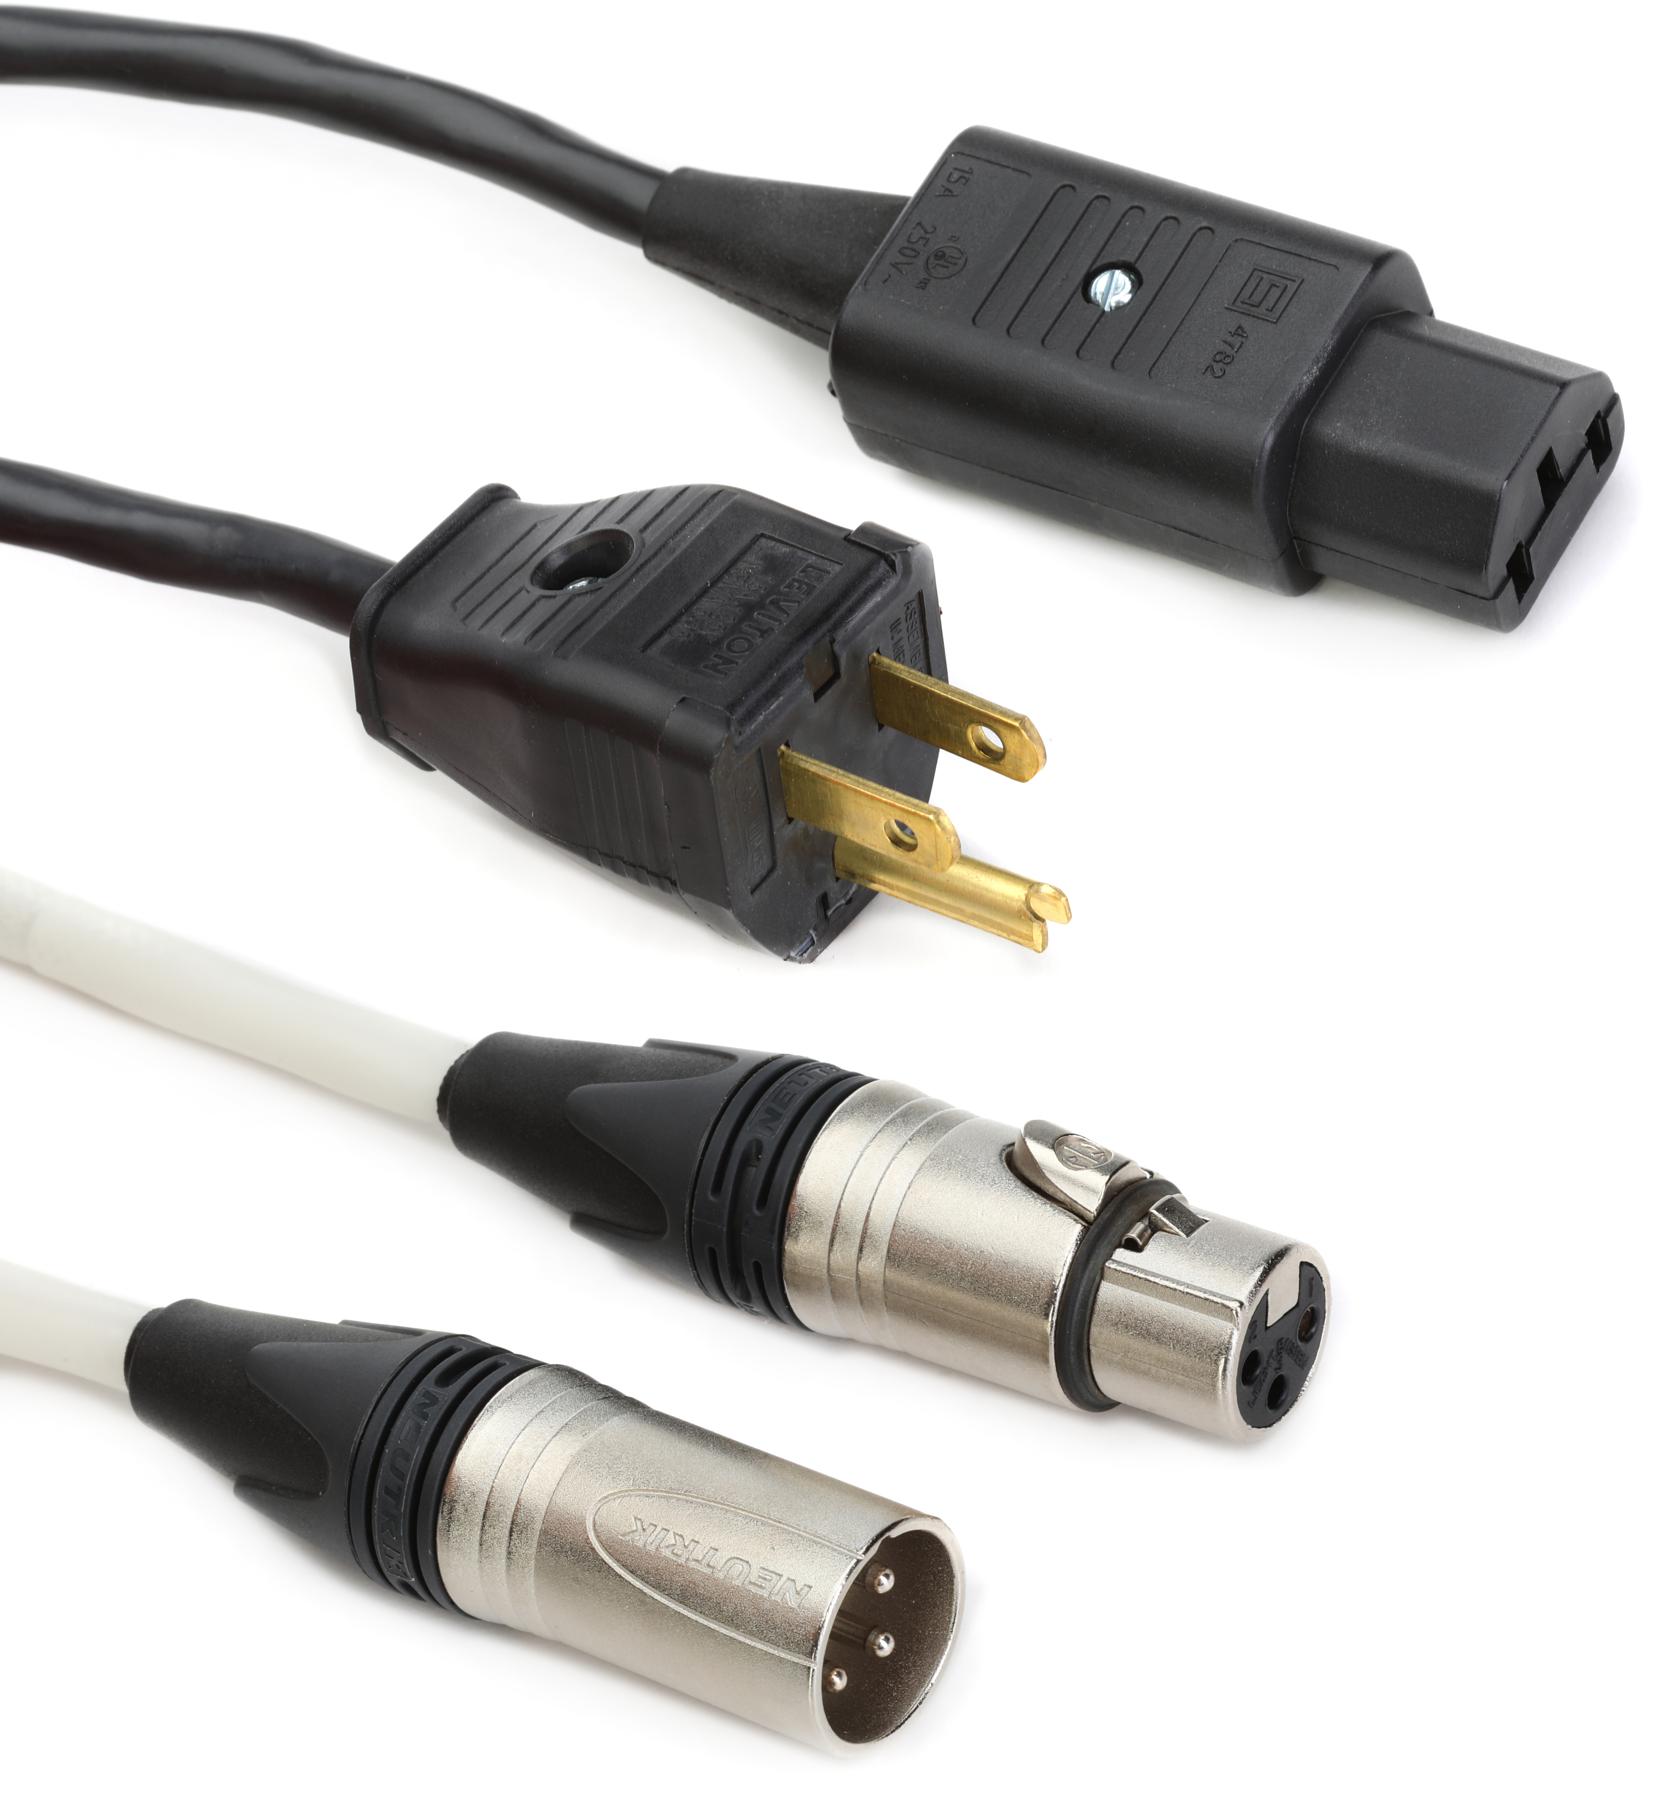 JBL EONONECOMPACT-512V EON One Compact 5v to 12v USB Power Cable